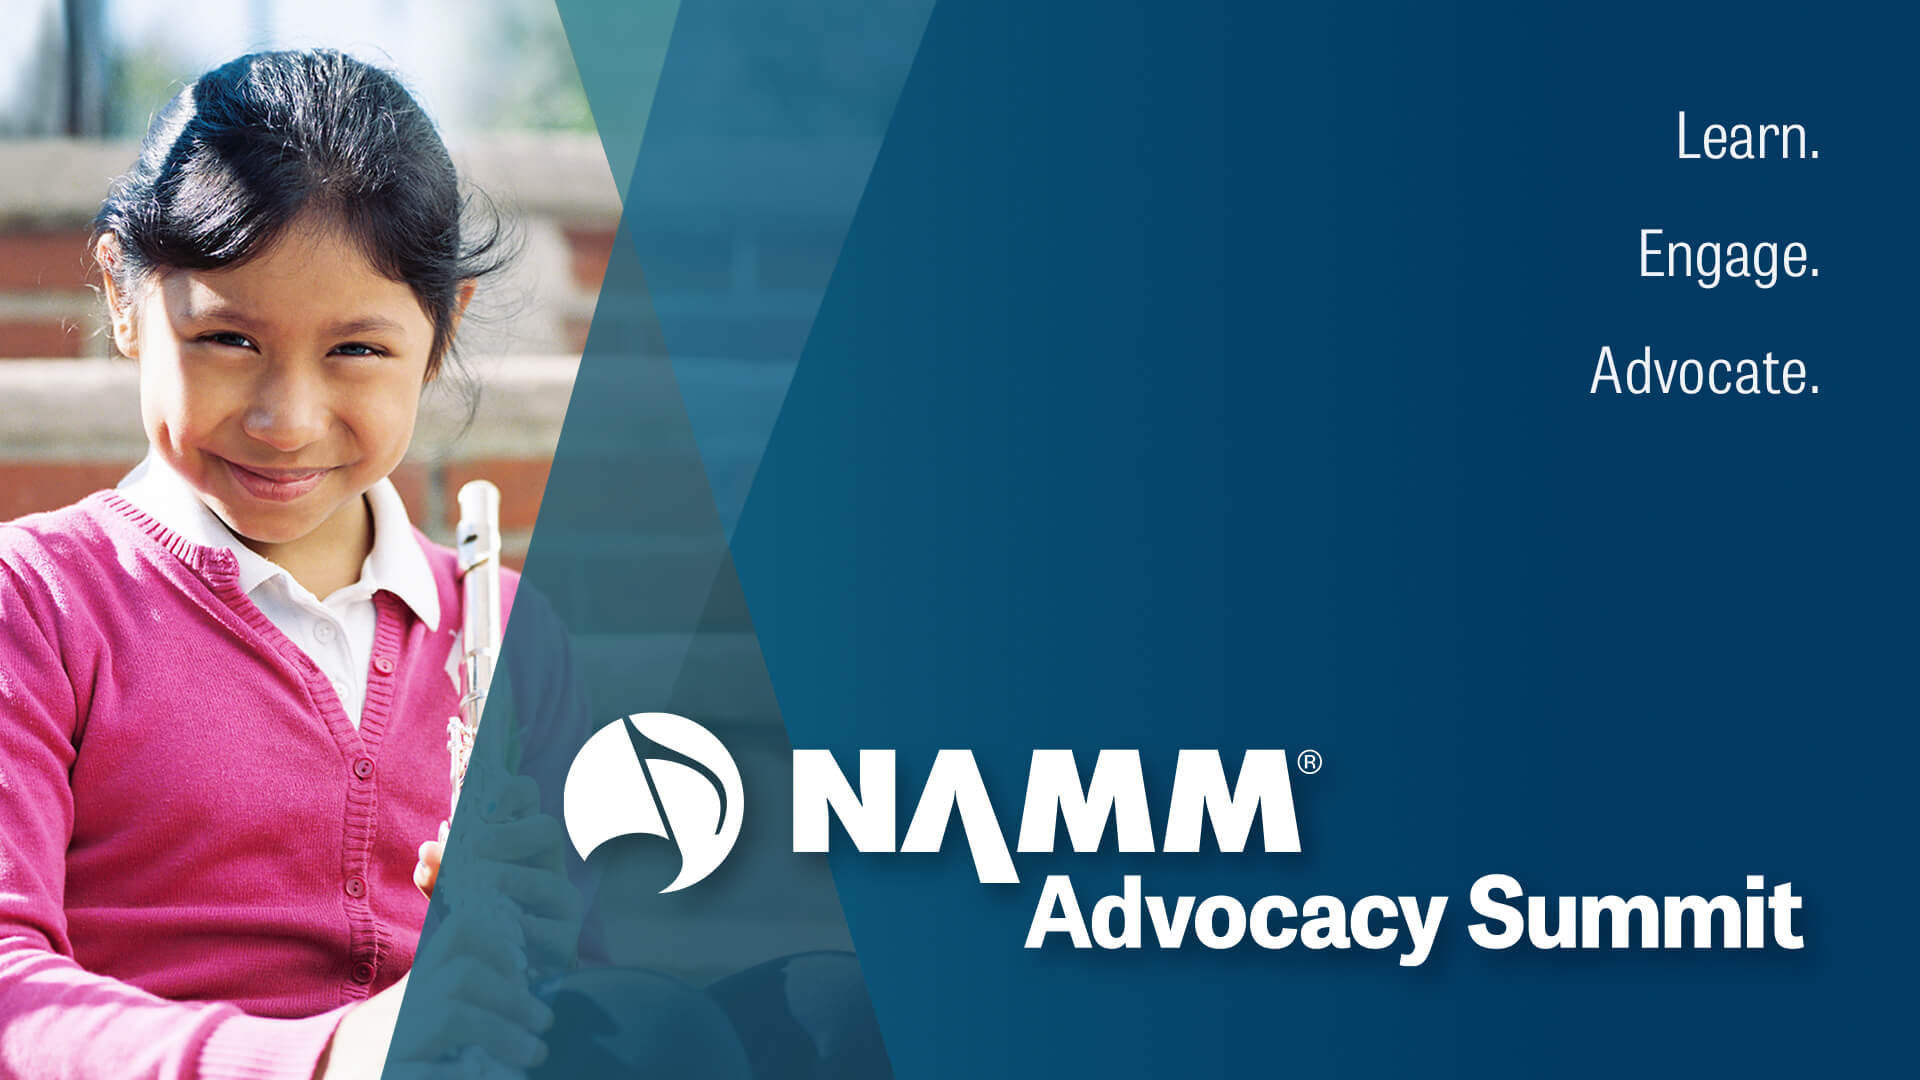 NAMM Advocacy Summit